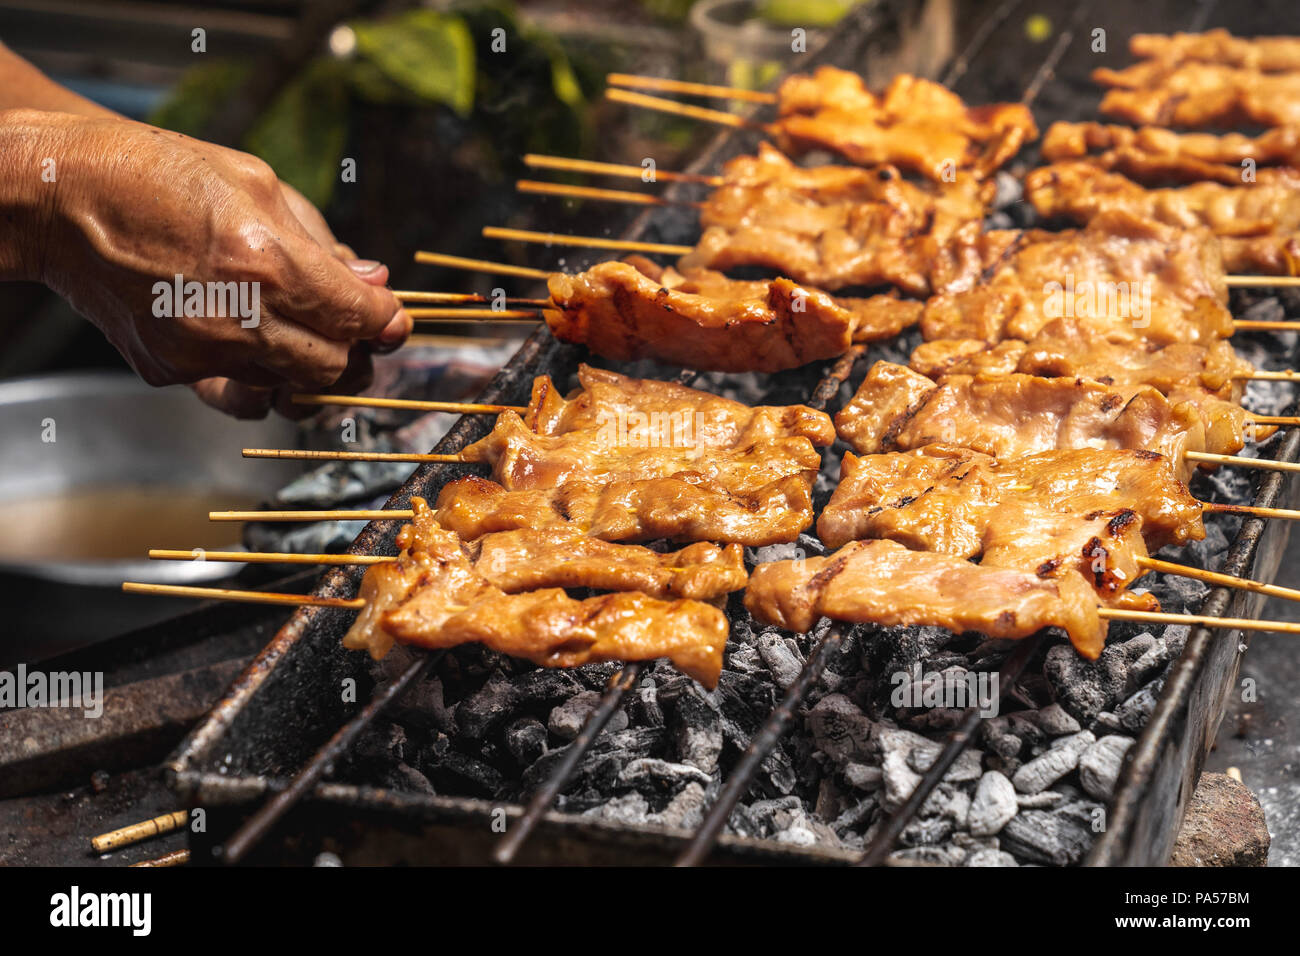 Premium Photo  Closeup of grilled skewered milk pork on stick thai street  food market